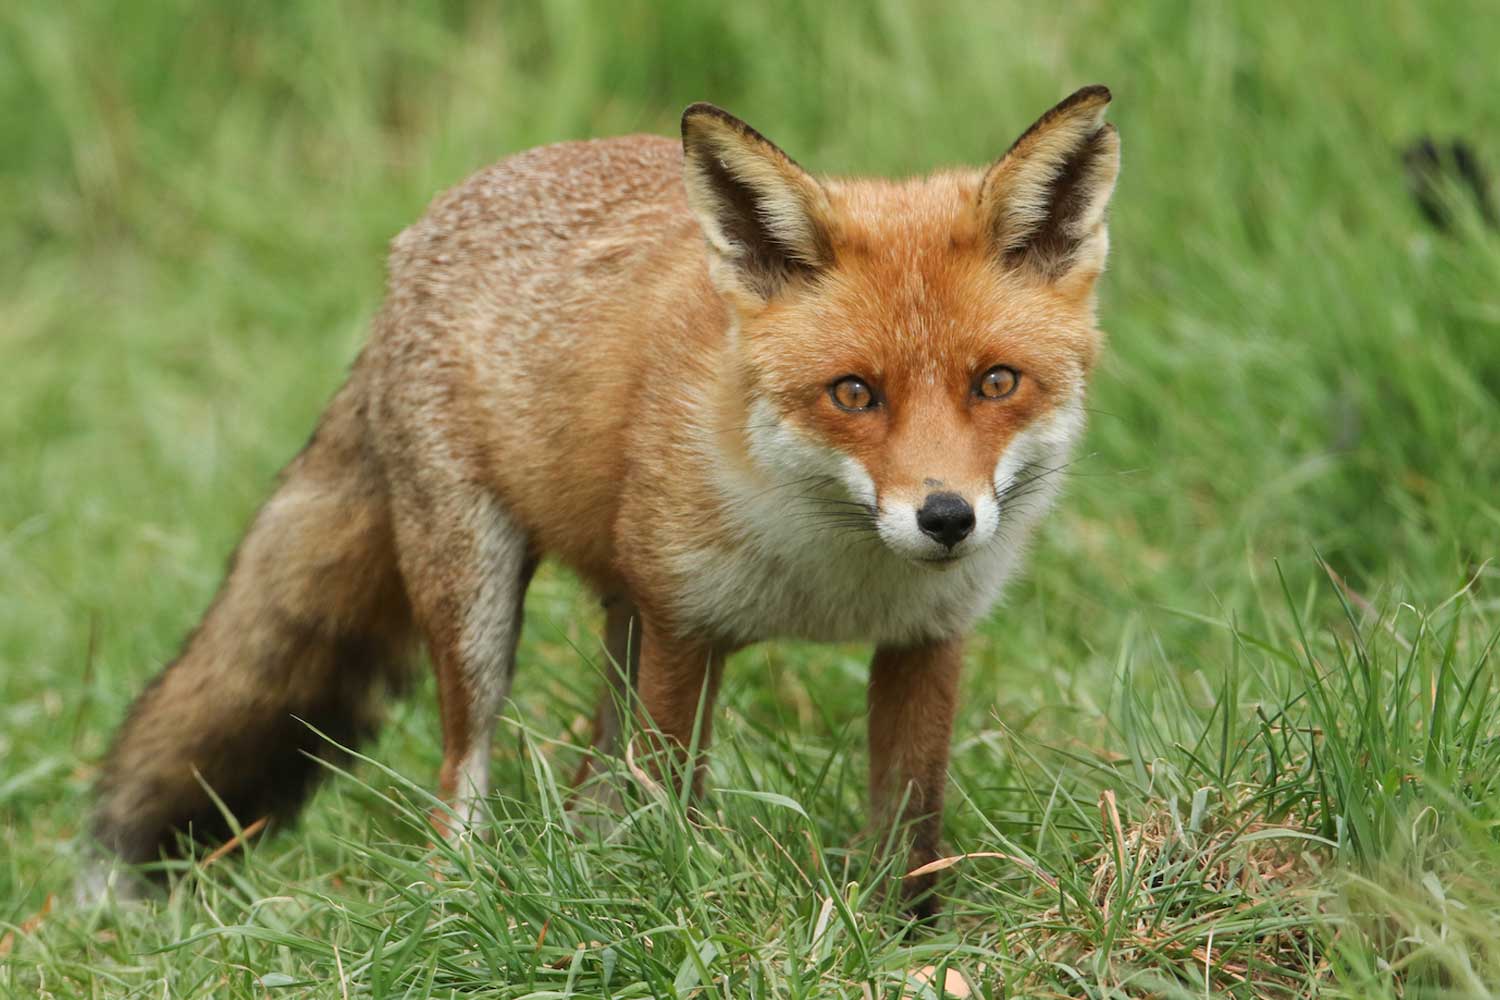 Red fox standing in grass.